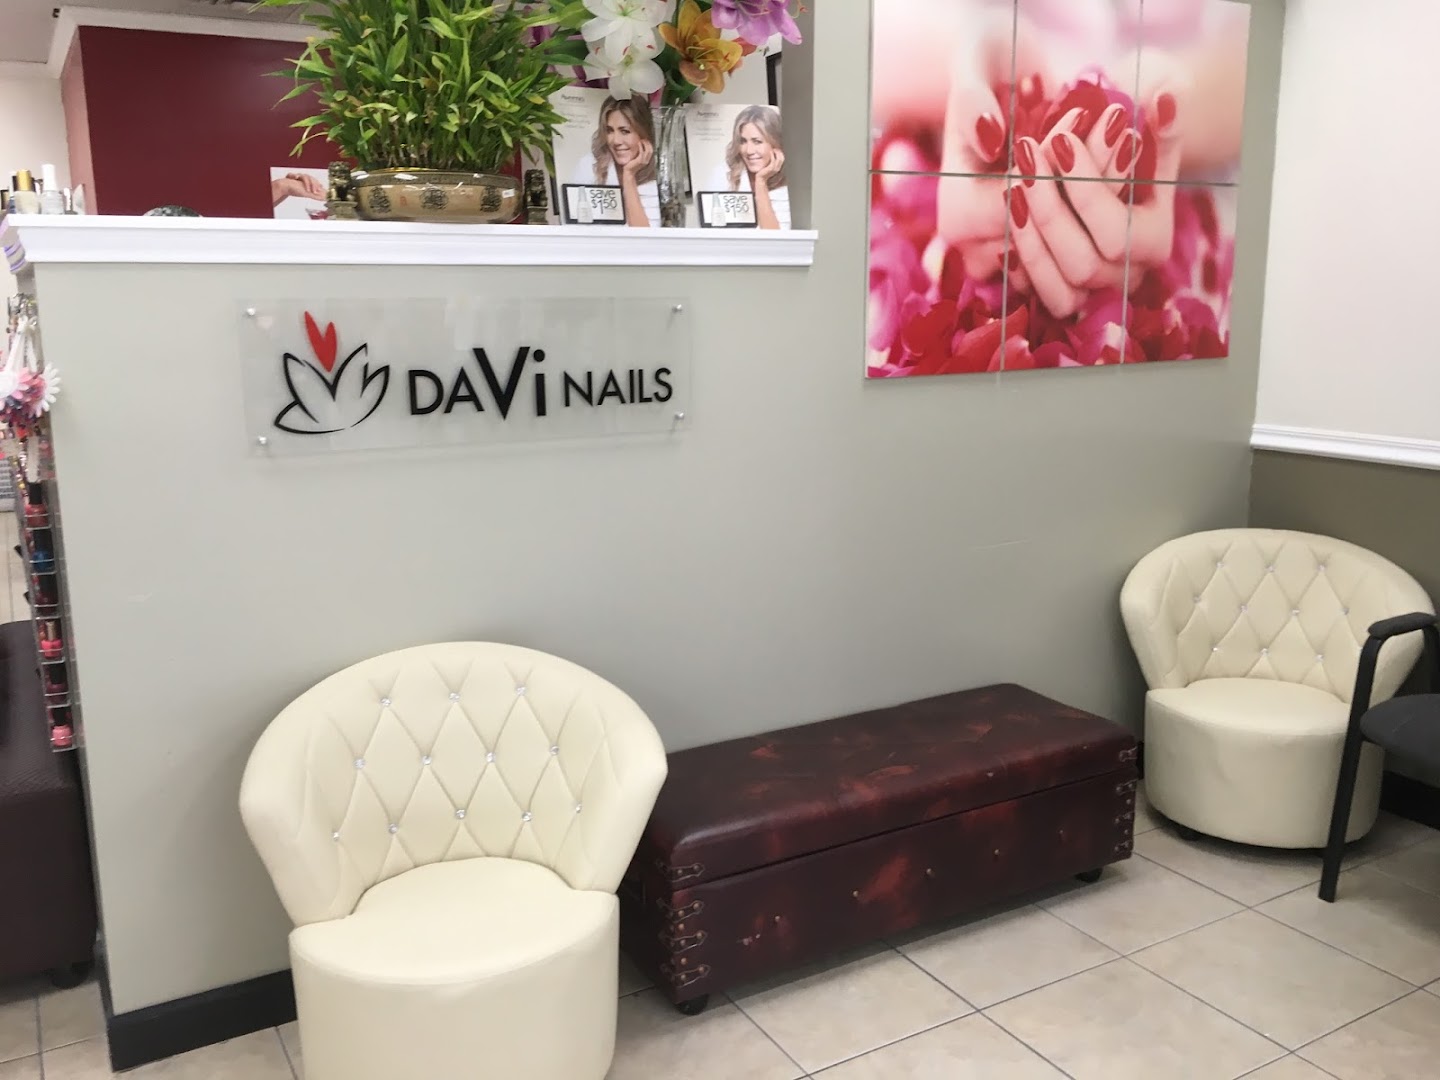 DaVi Nails Salon, waxing & spa